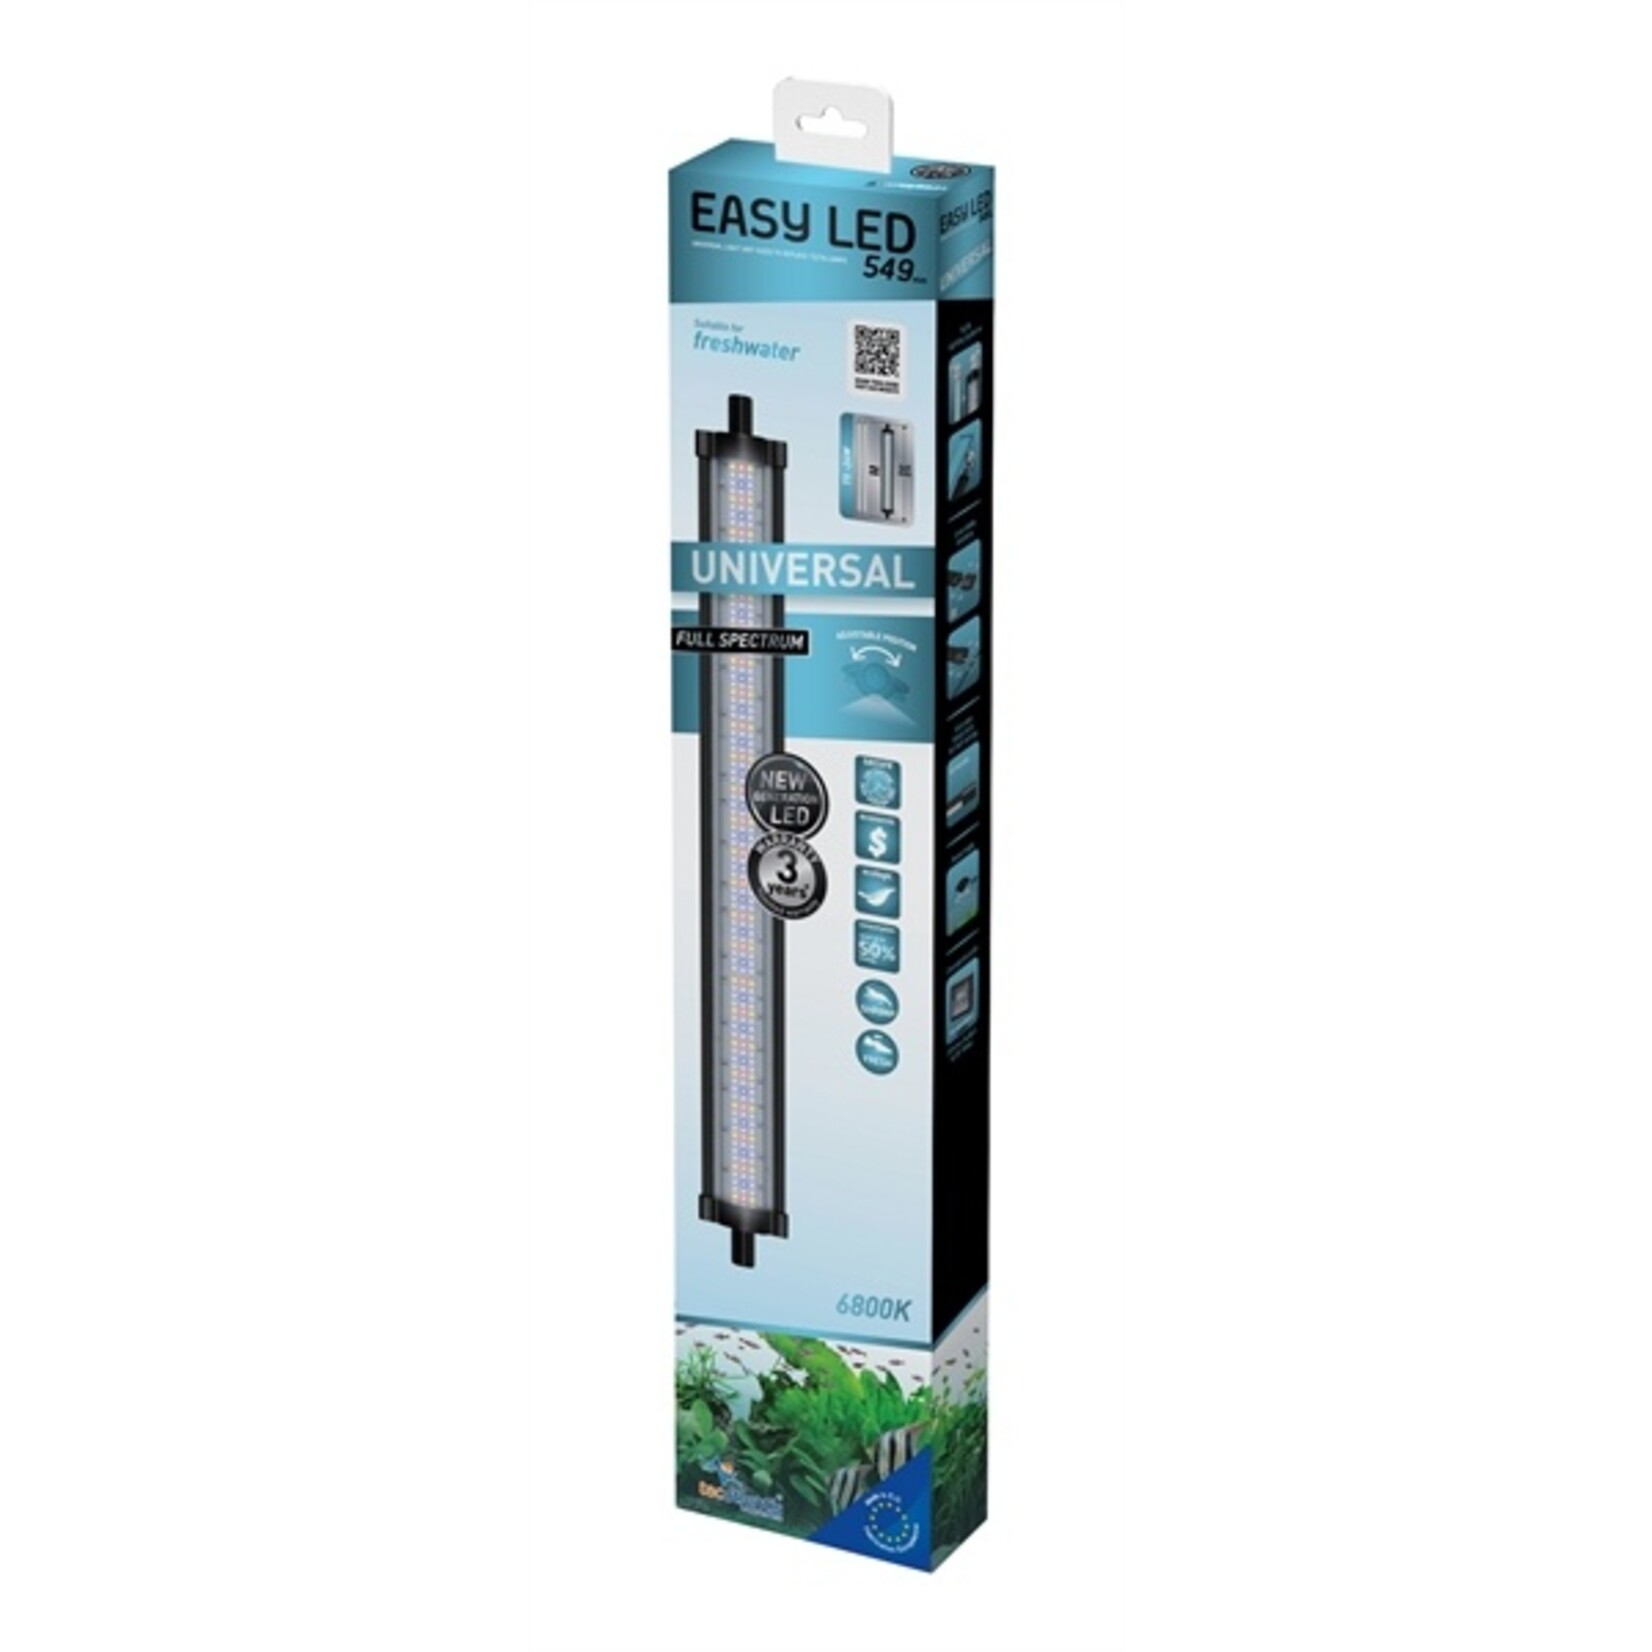 Aquatlantis Easy LED universal freshwater 549 mm